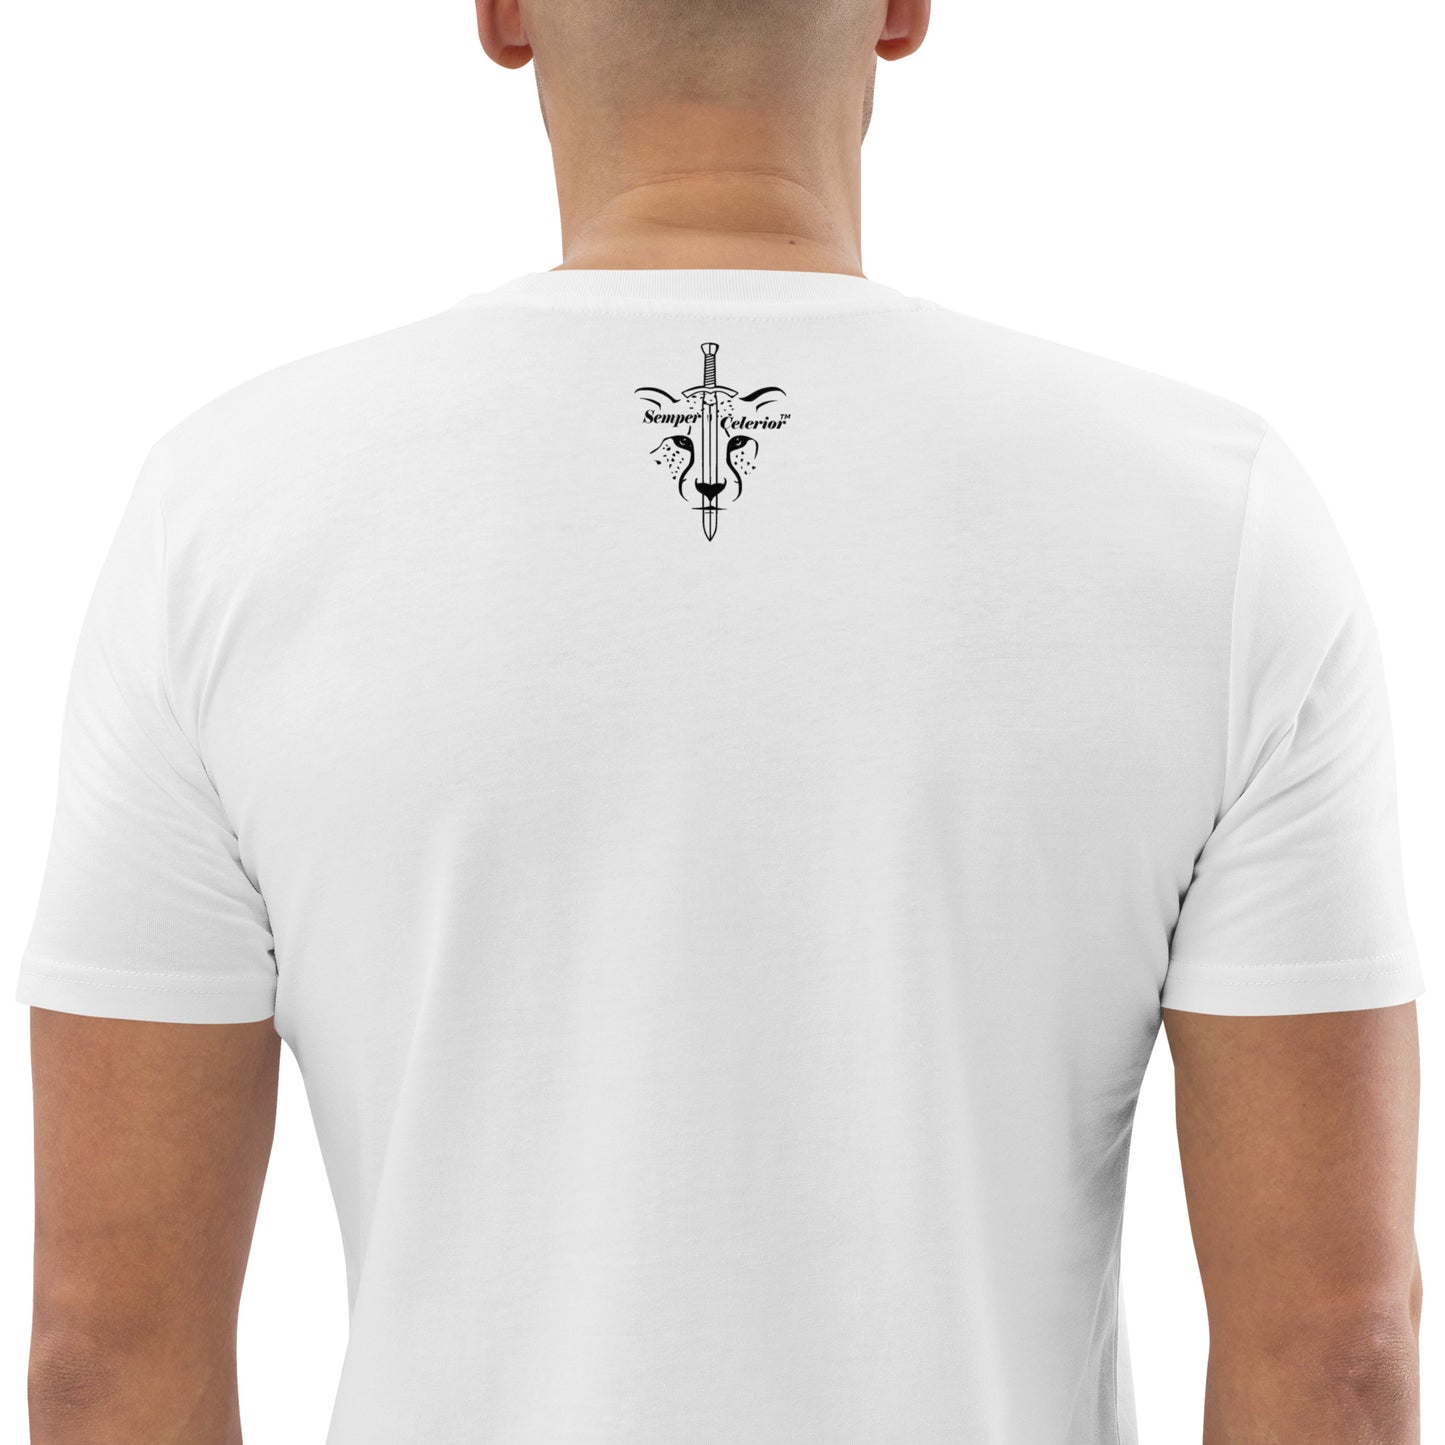 
                  
                    K70 Riders Unisex Organic Cotton T-Shirt
                  
                